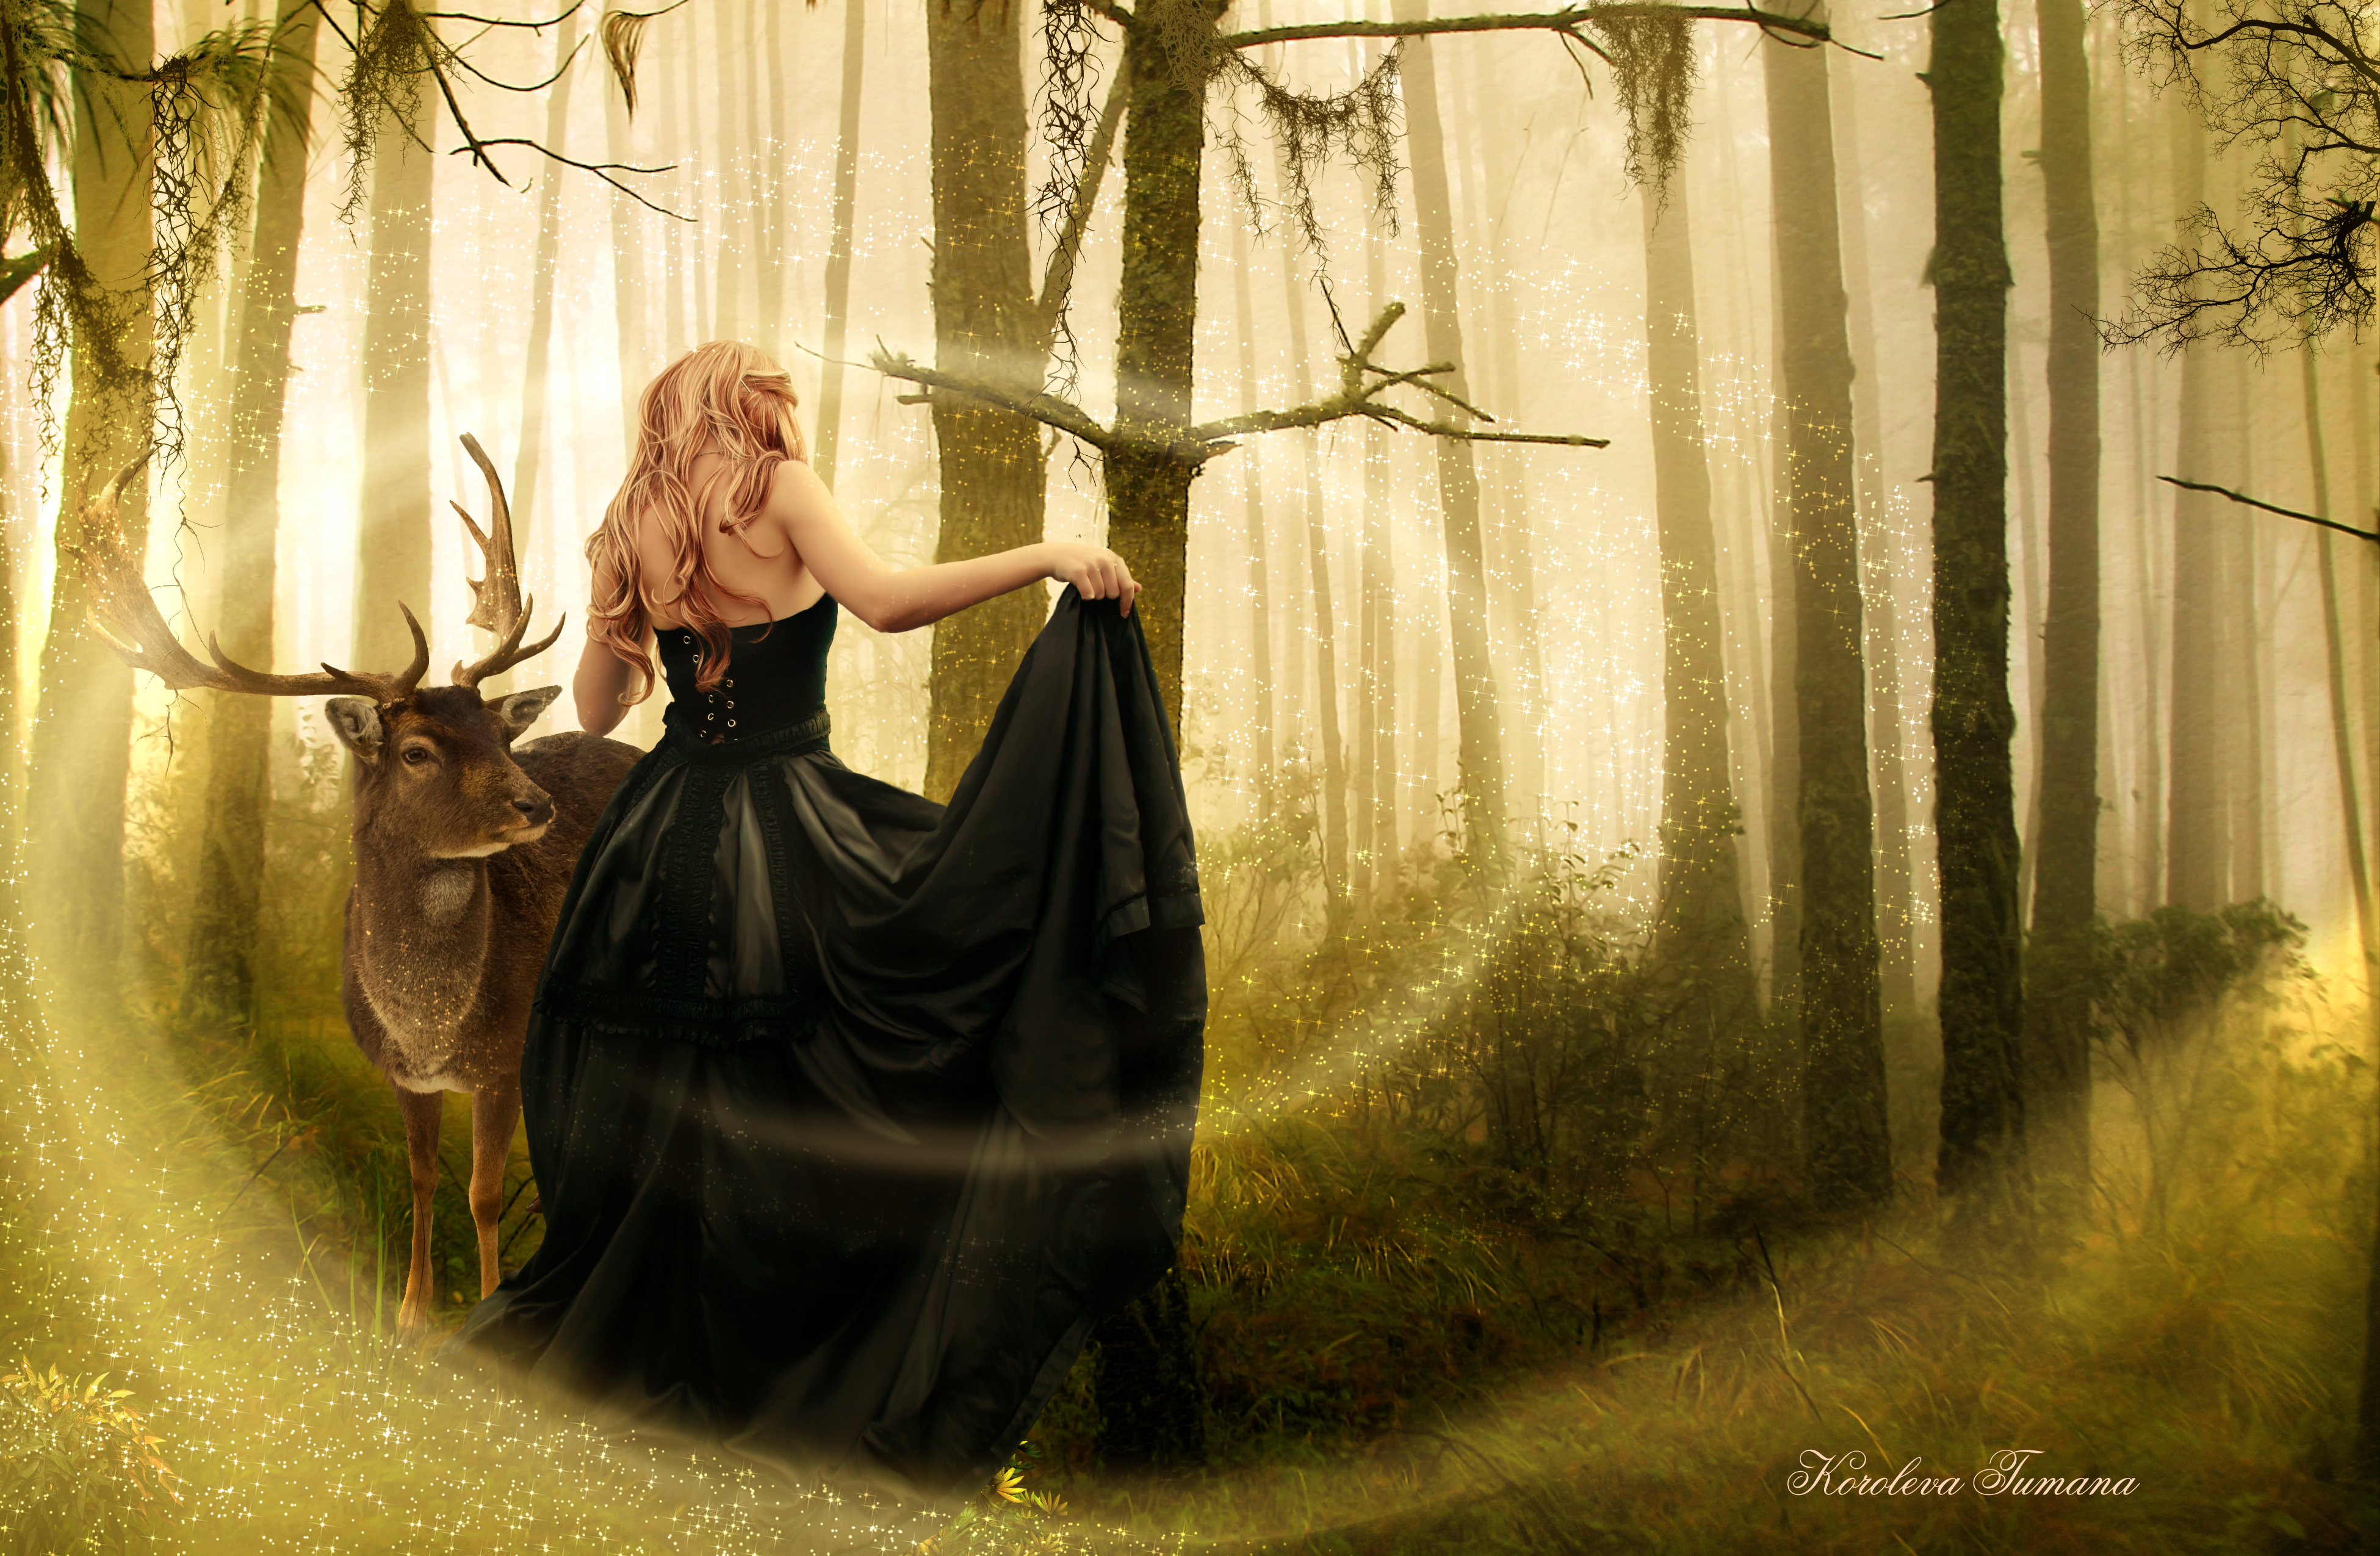 Fantasy Woman Girl Gothic Forest Buck Deer 3900x2550